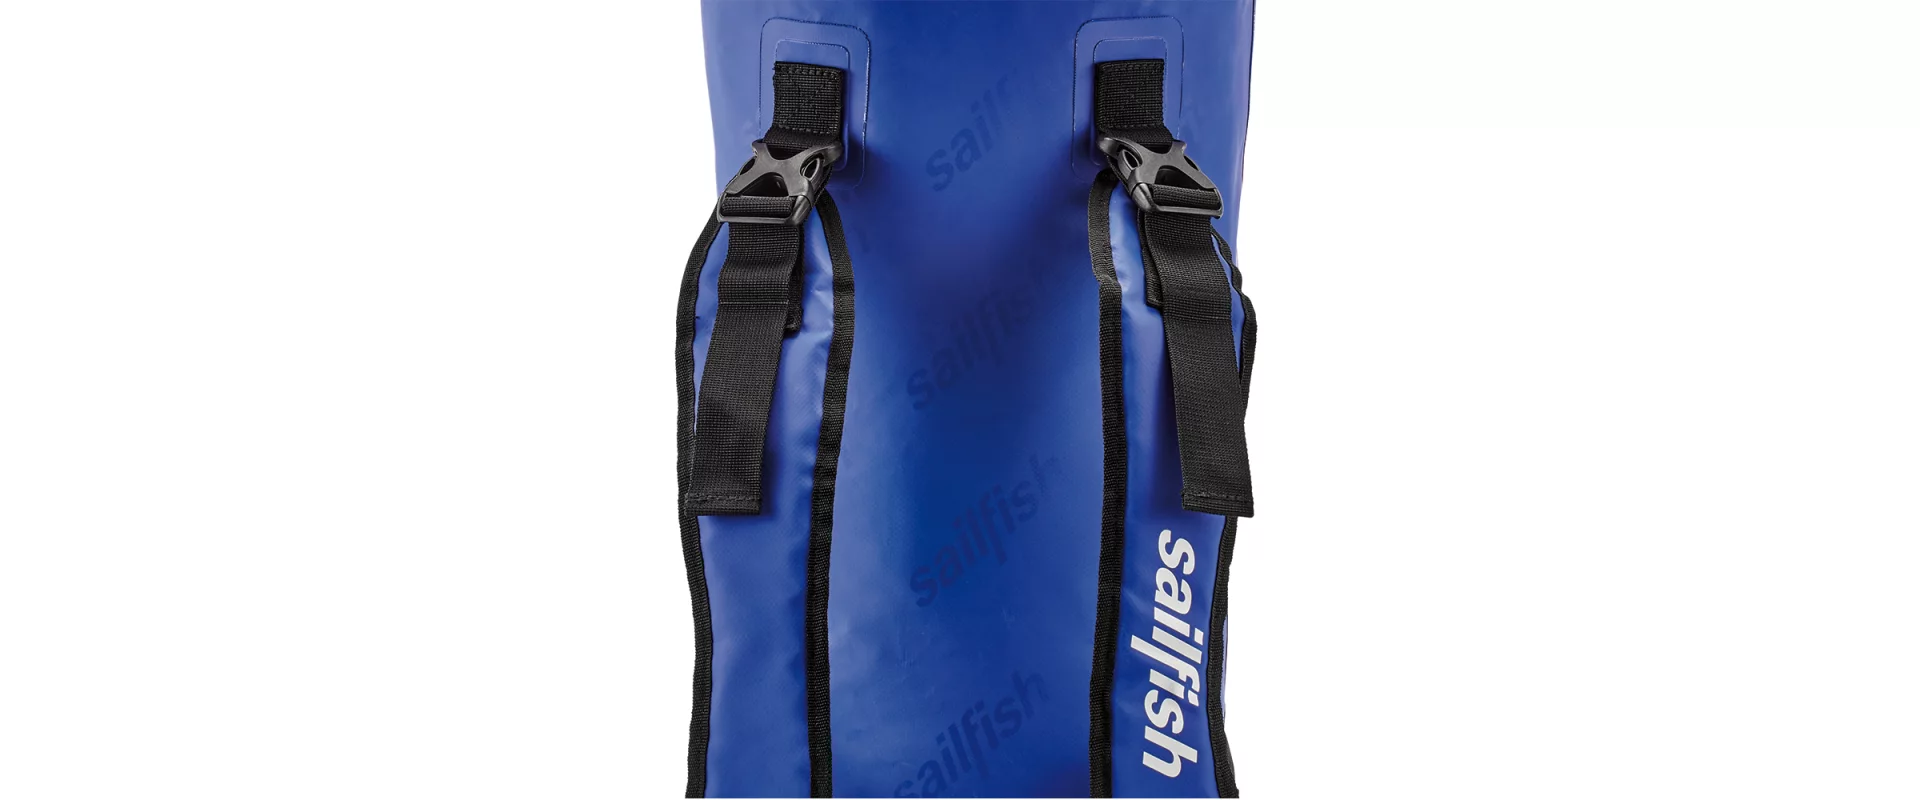 SailFish Waterproof Sportsbag Durban / Водонепроницаемая спортивная сумка фото 1